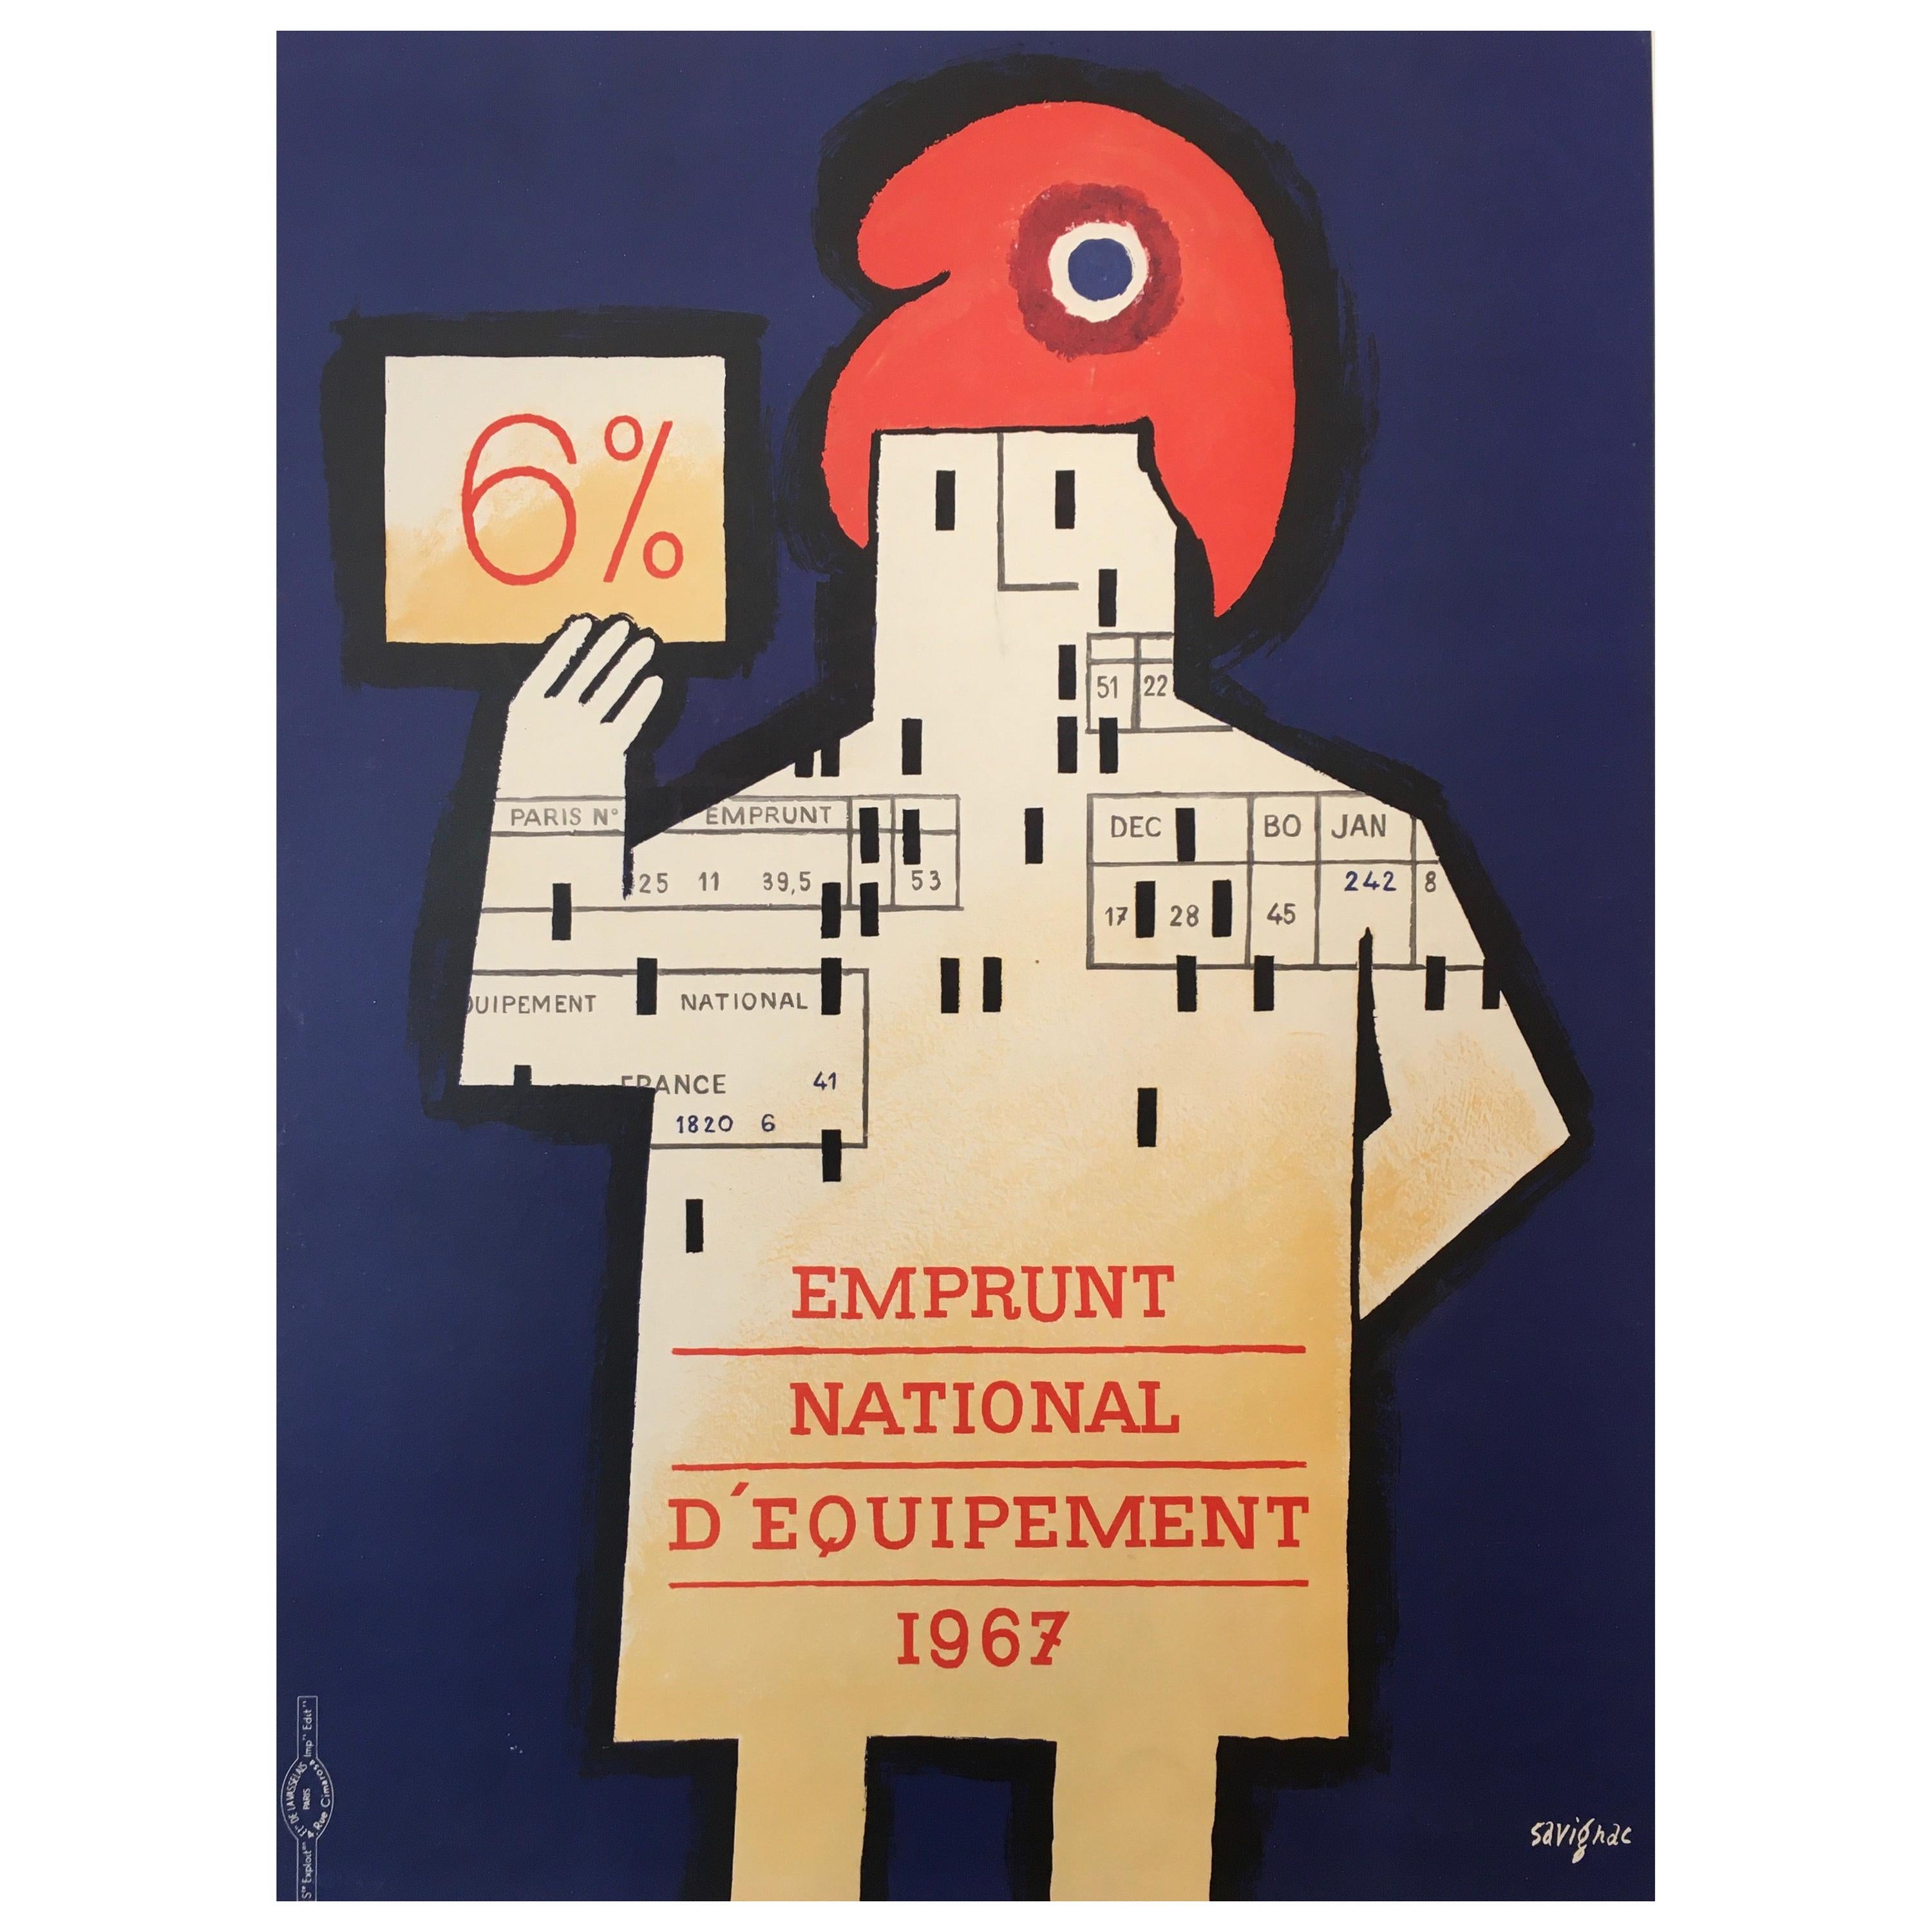 Savignac, 'Emprunt National D’Equipement', Original Vintage French Poster, 1967